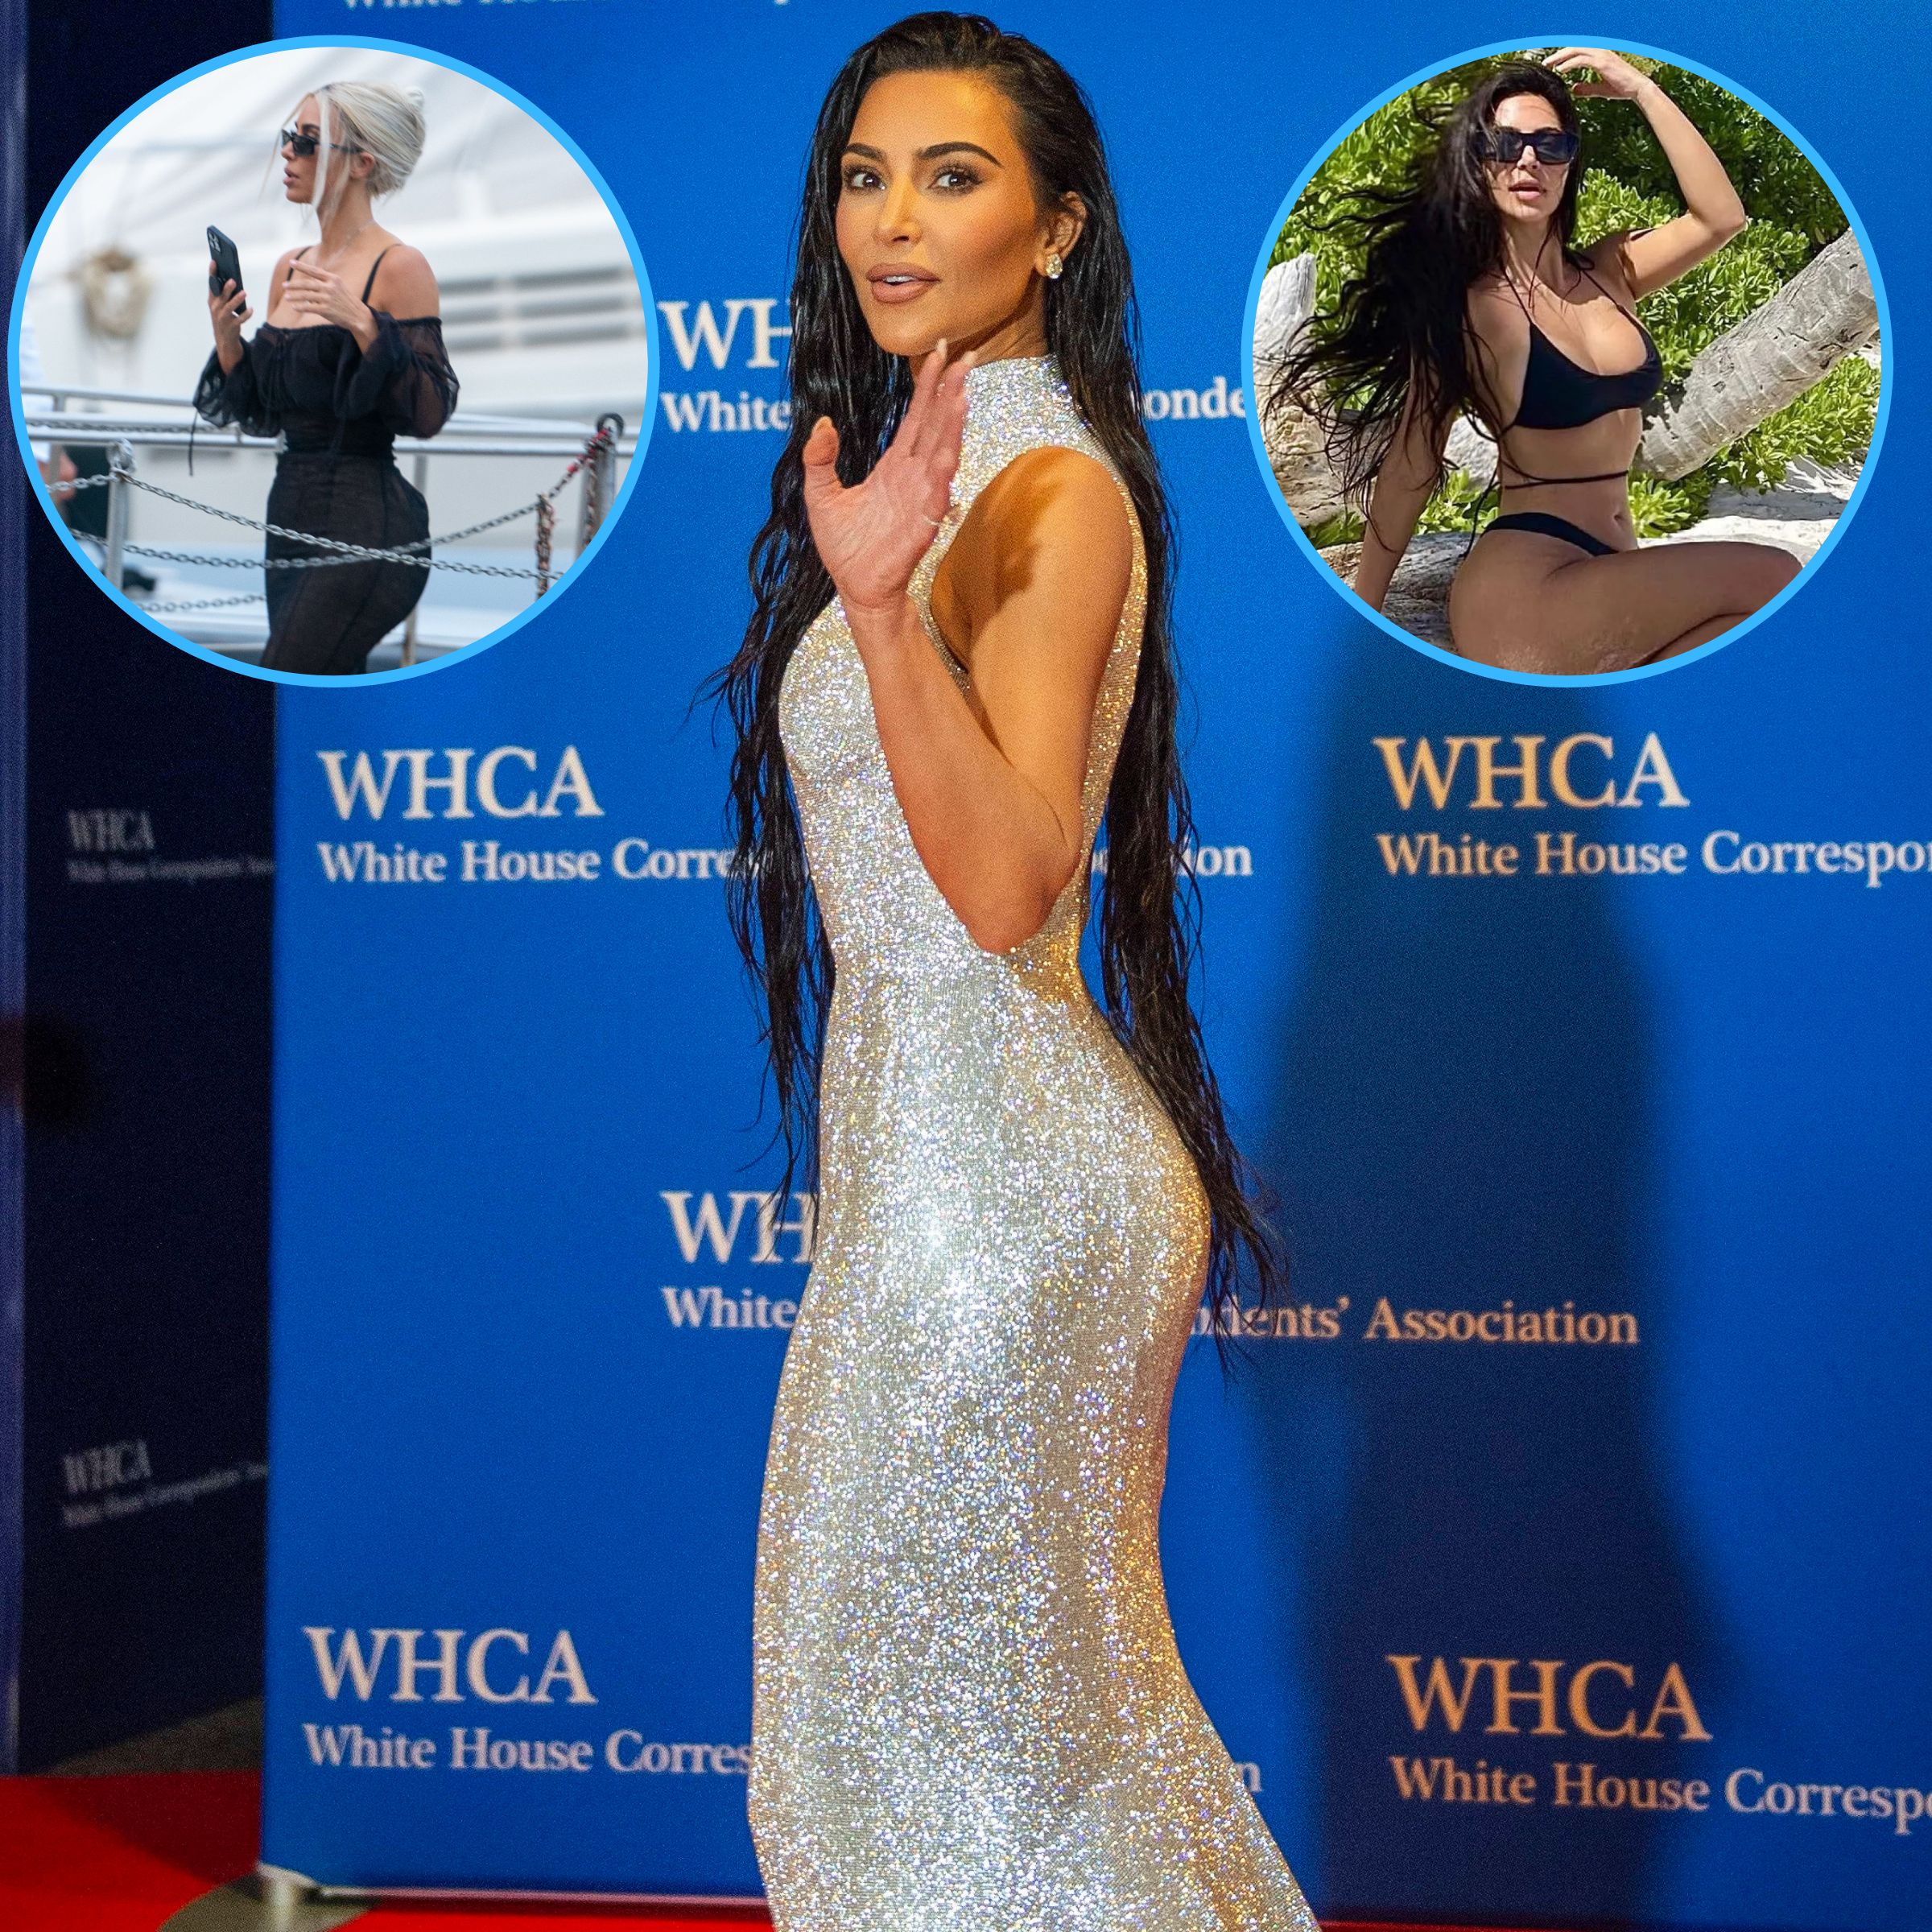 Kim Kardashian Full Sex Video 40 - Kim Kardashian Butt Photos: Best Pics Showing Off Her Curves